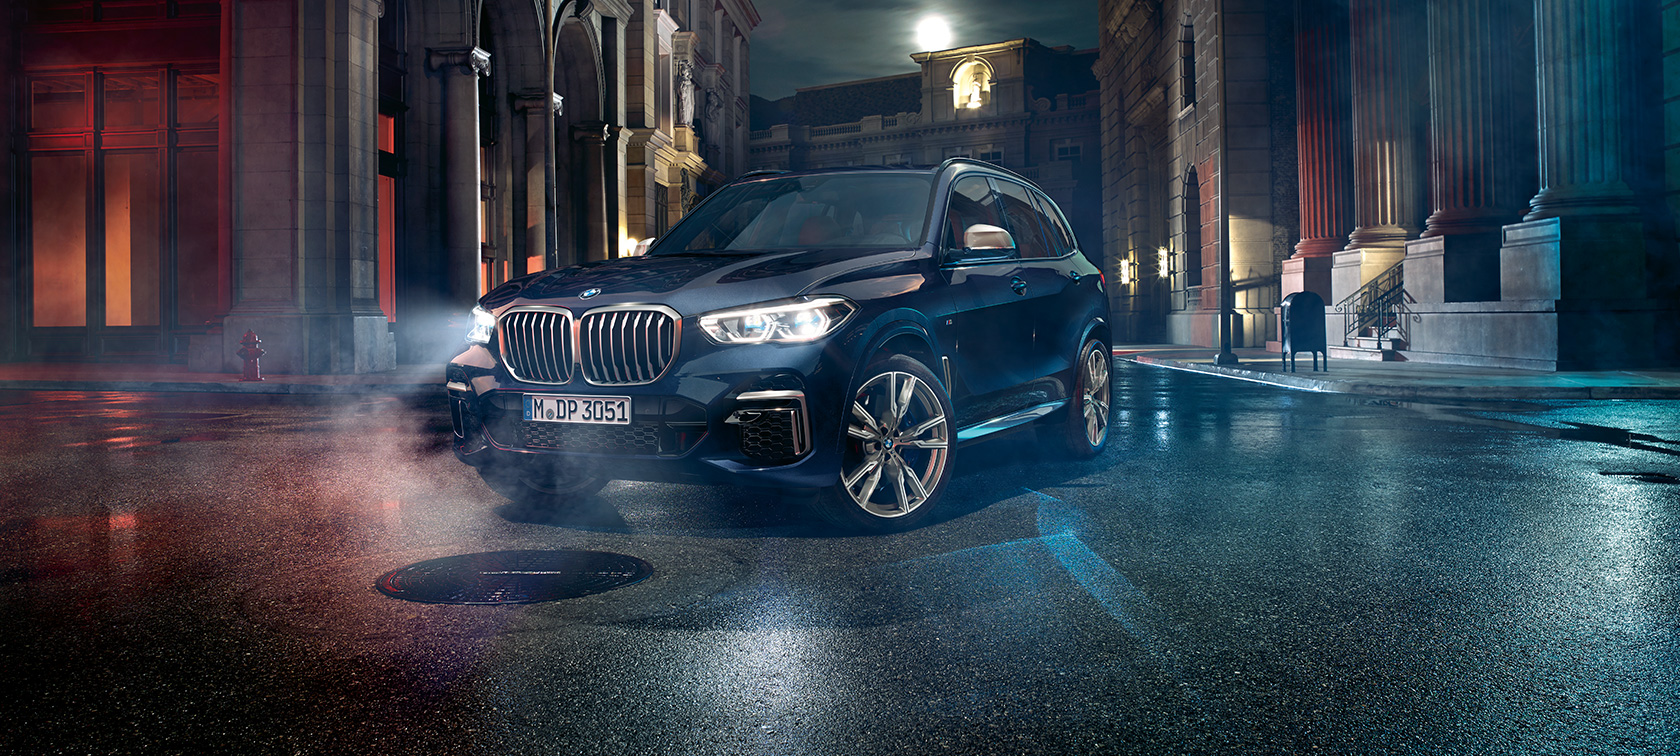 BMW X5 M50i and M50d G05 2018 SUV Carbon black metallic three-quarter front view